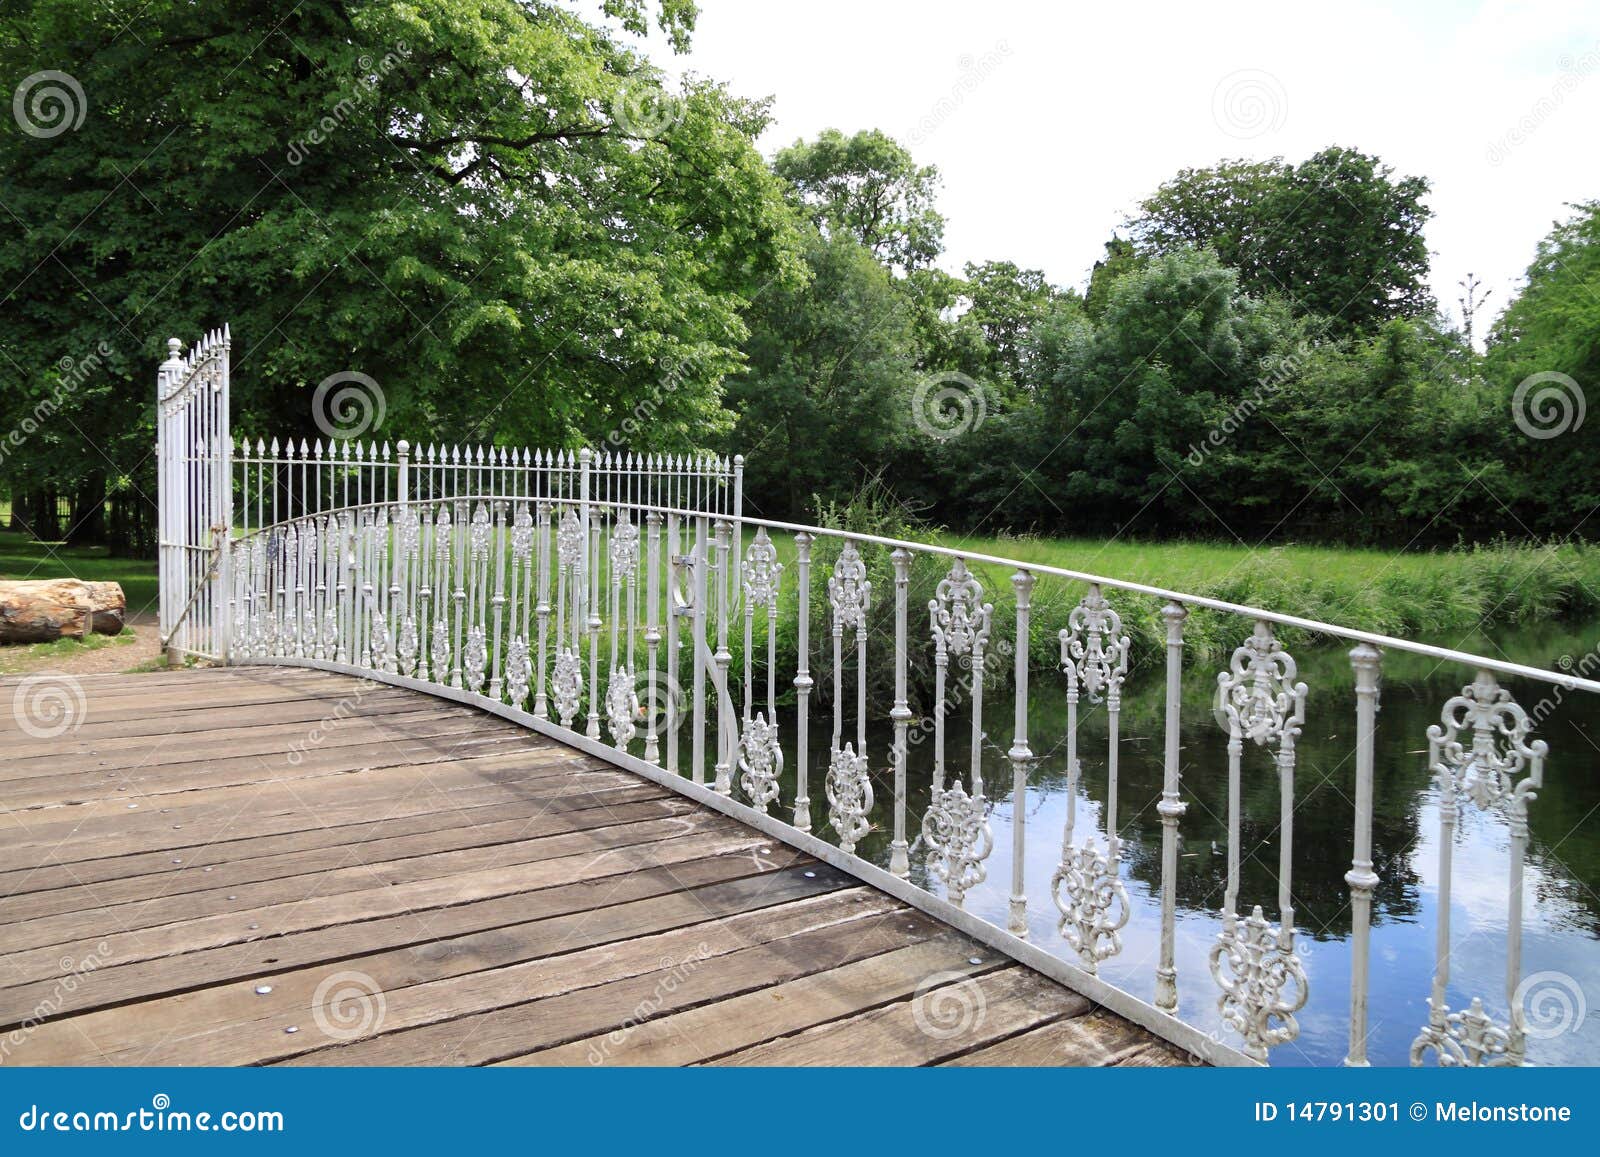 iron railing on bridge